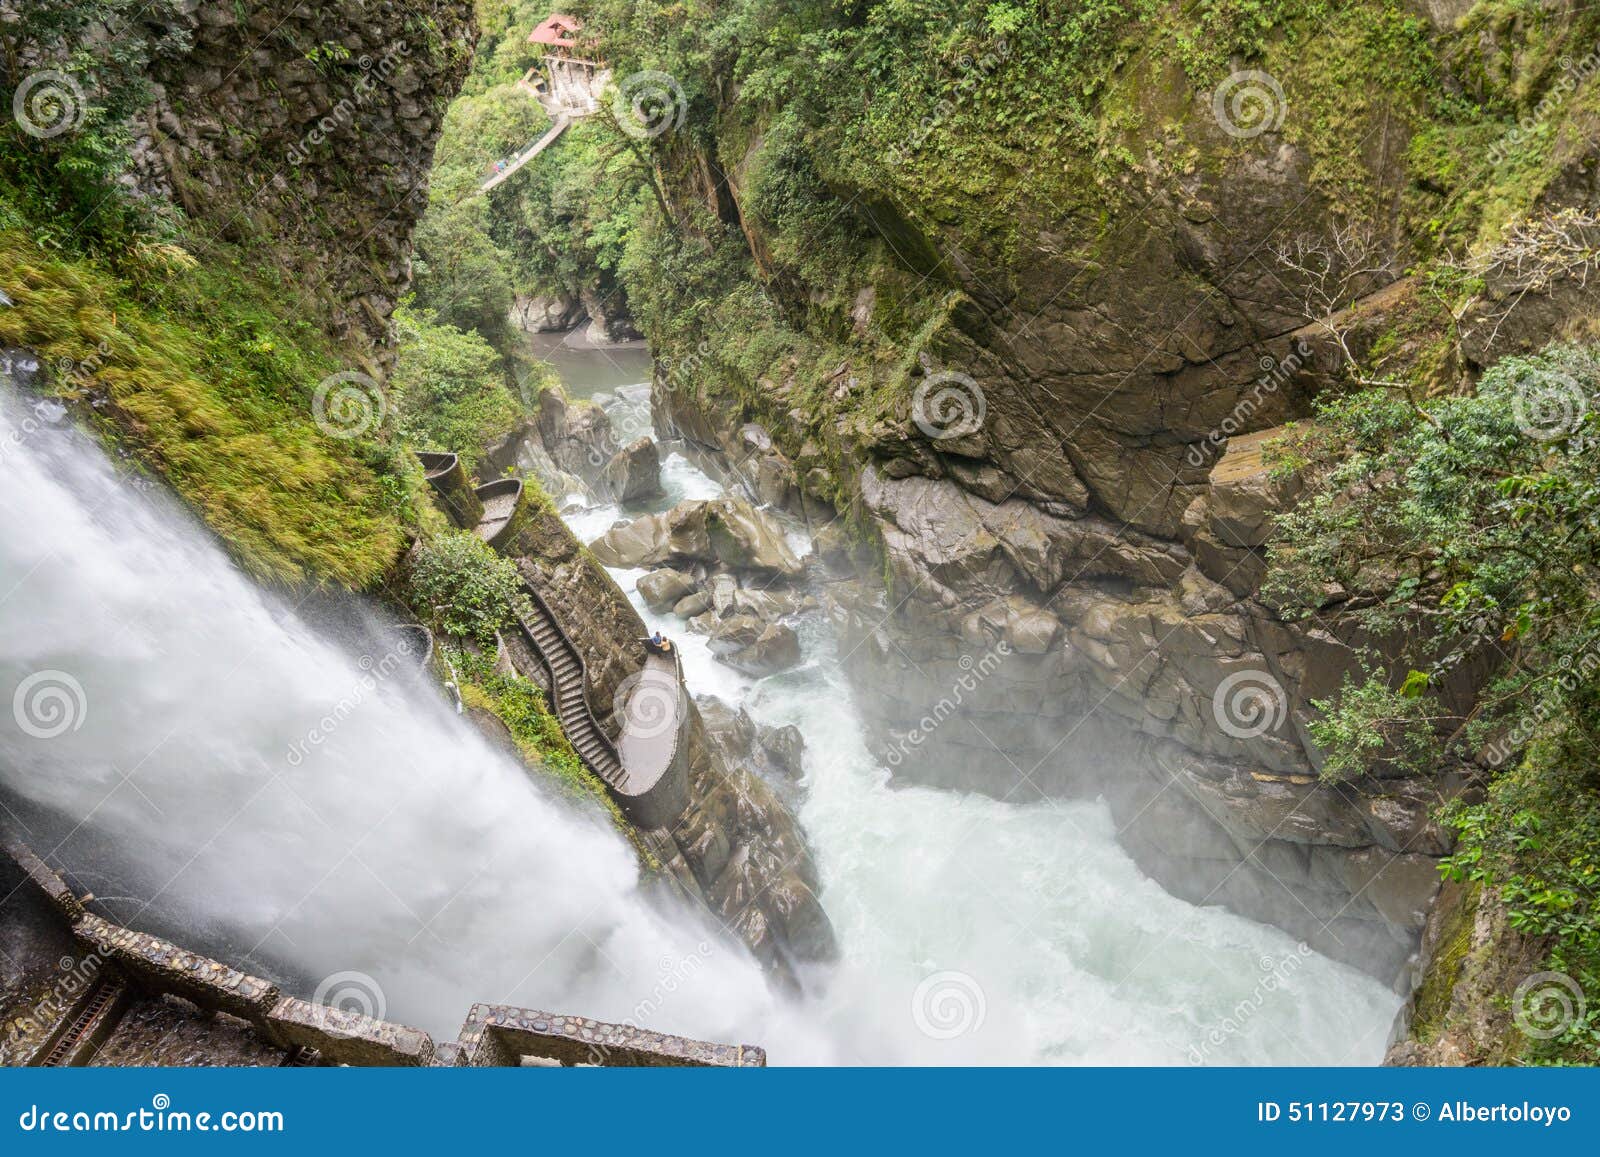 pailon del diablo waterfall, ecuador